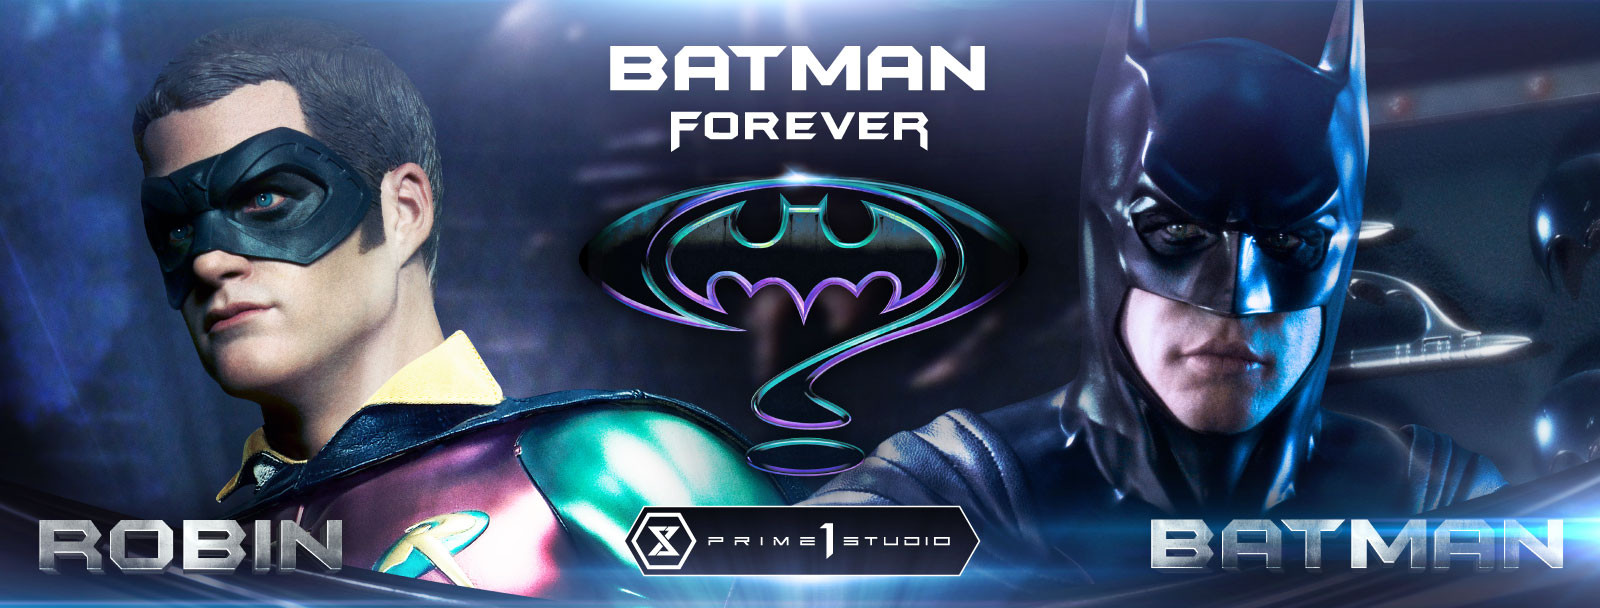 Batman Forever Campaign